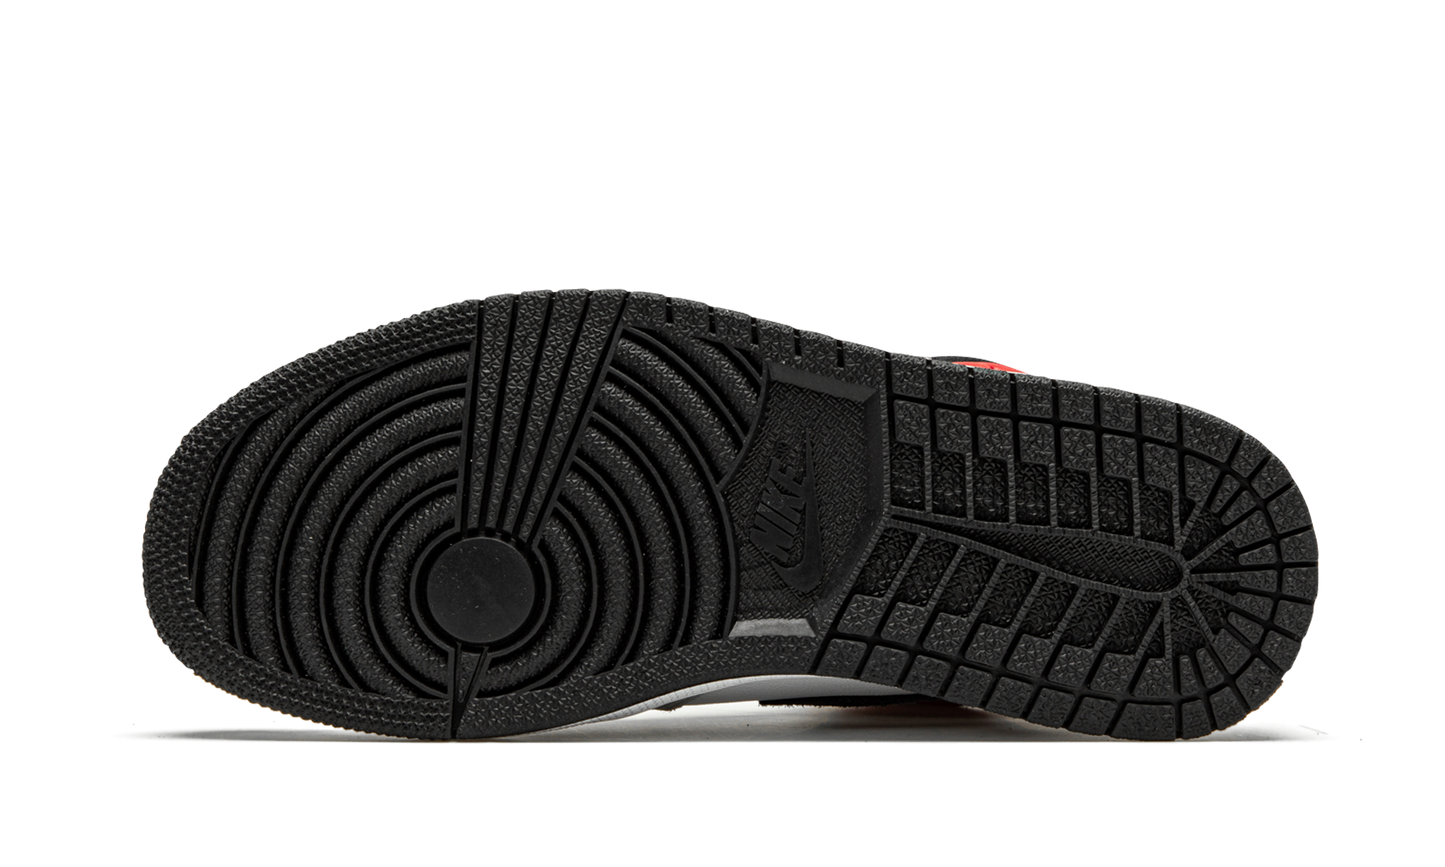 Nike Air Jordan 1 Retro High OG “Light Smoke Grey” - 555088 126 - 2020